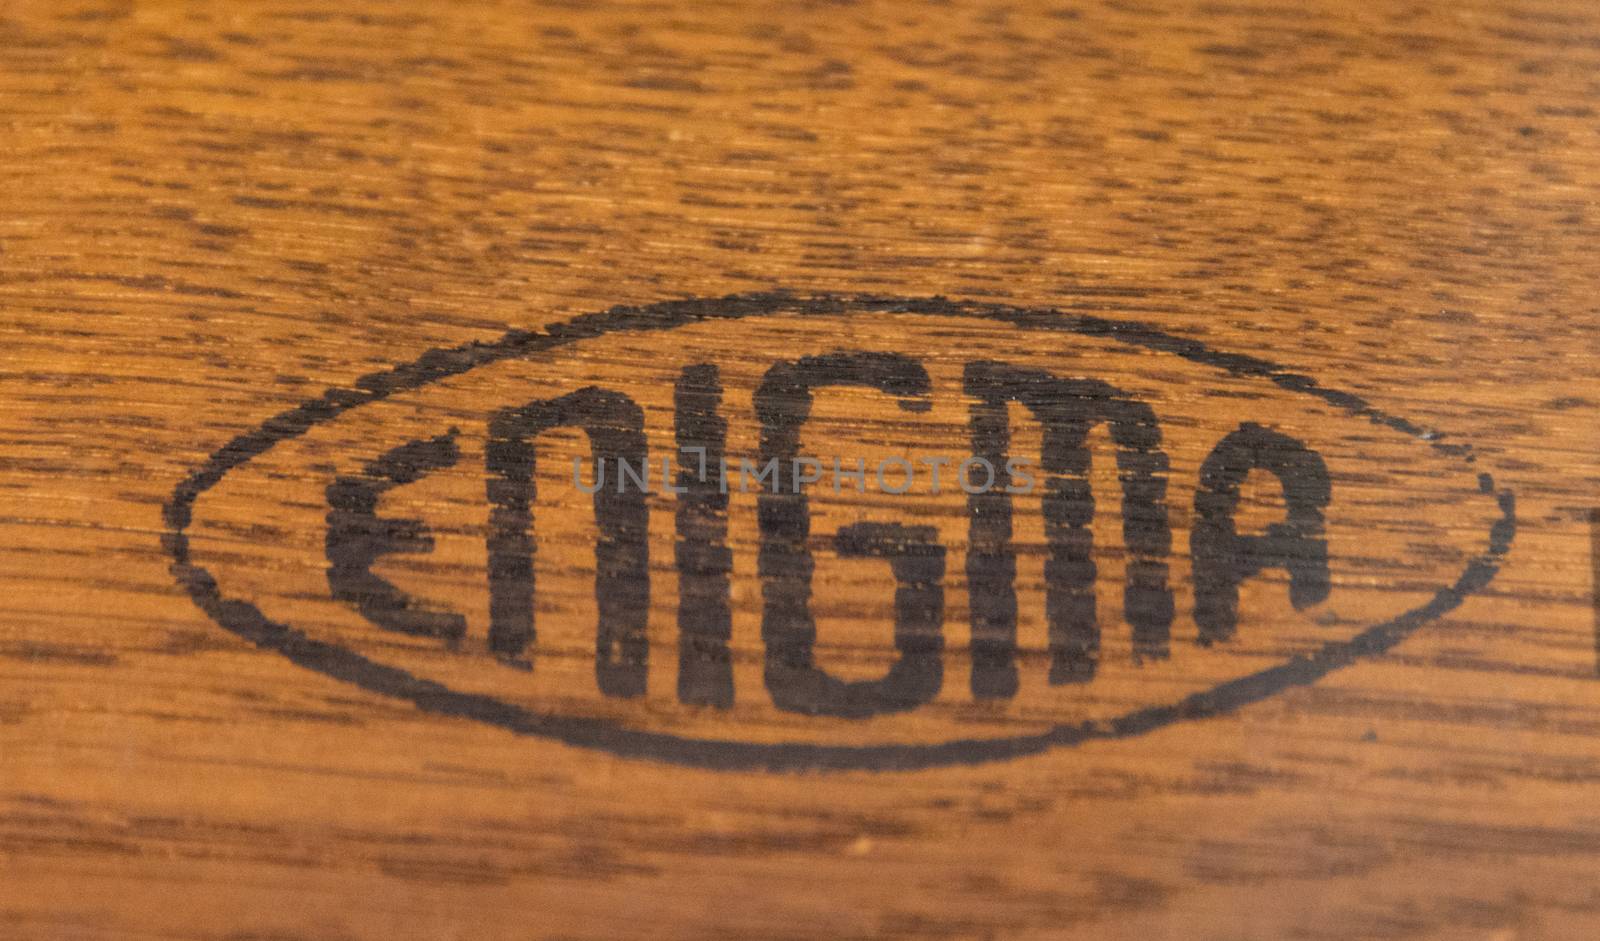 Enigma Machine logo by TimAwe